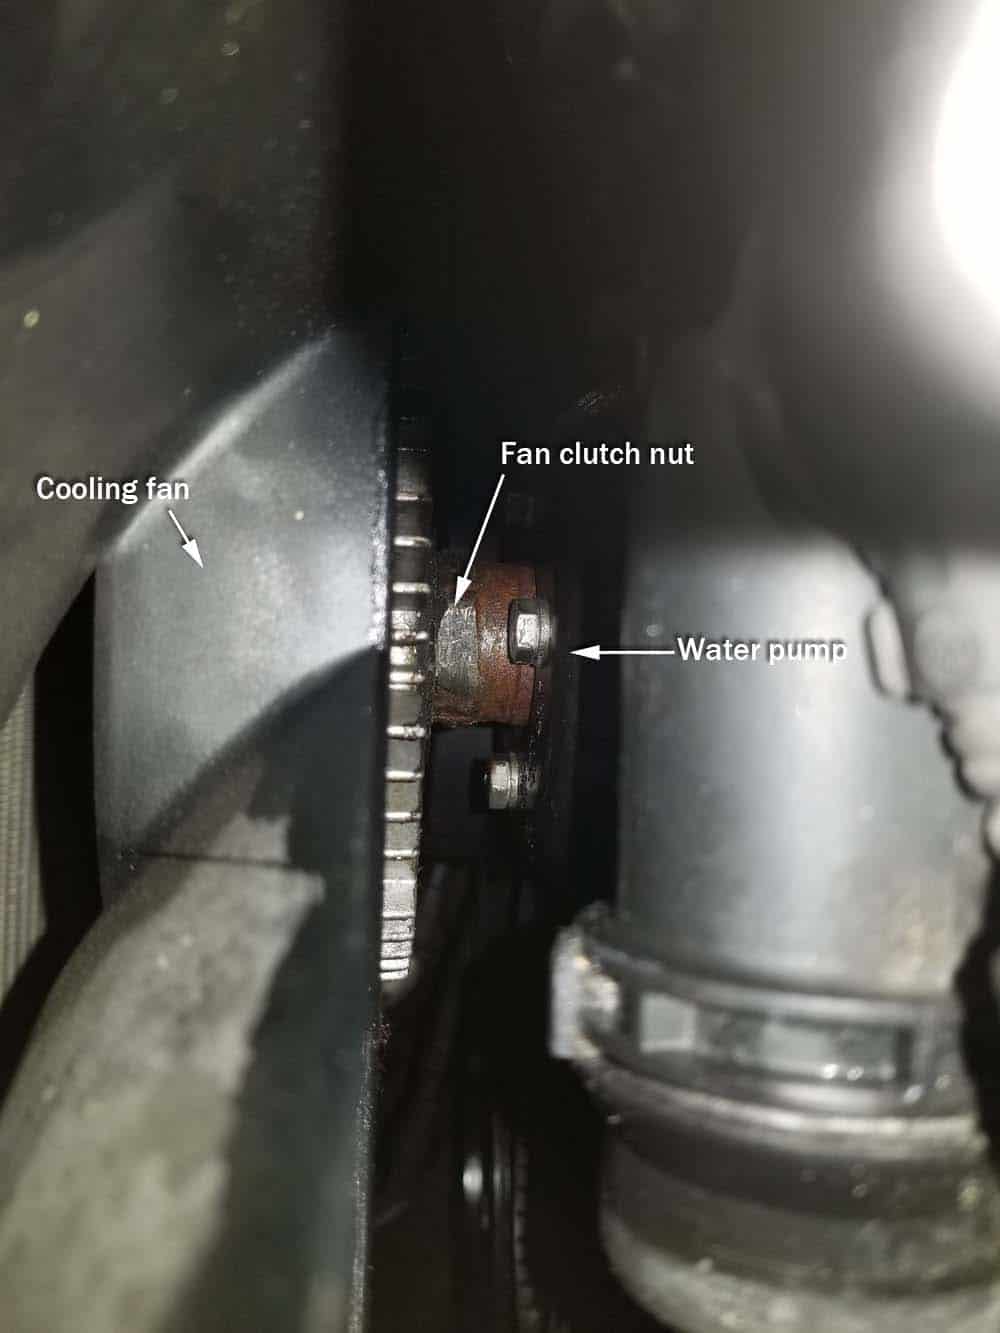 BMW E46 radiator - locate the fan clutch nut